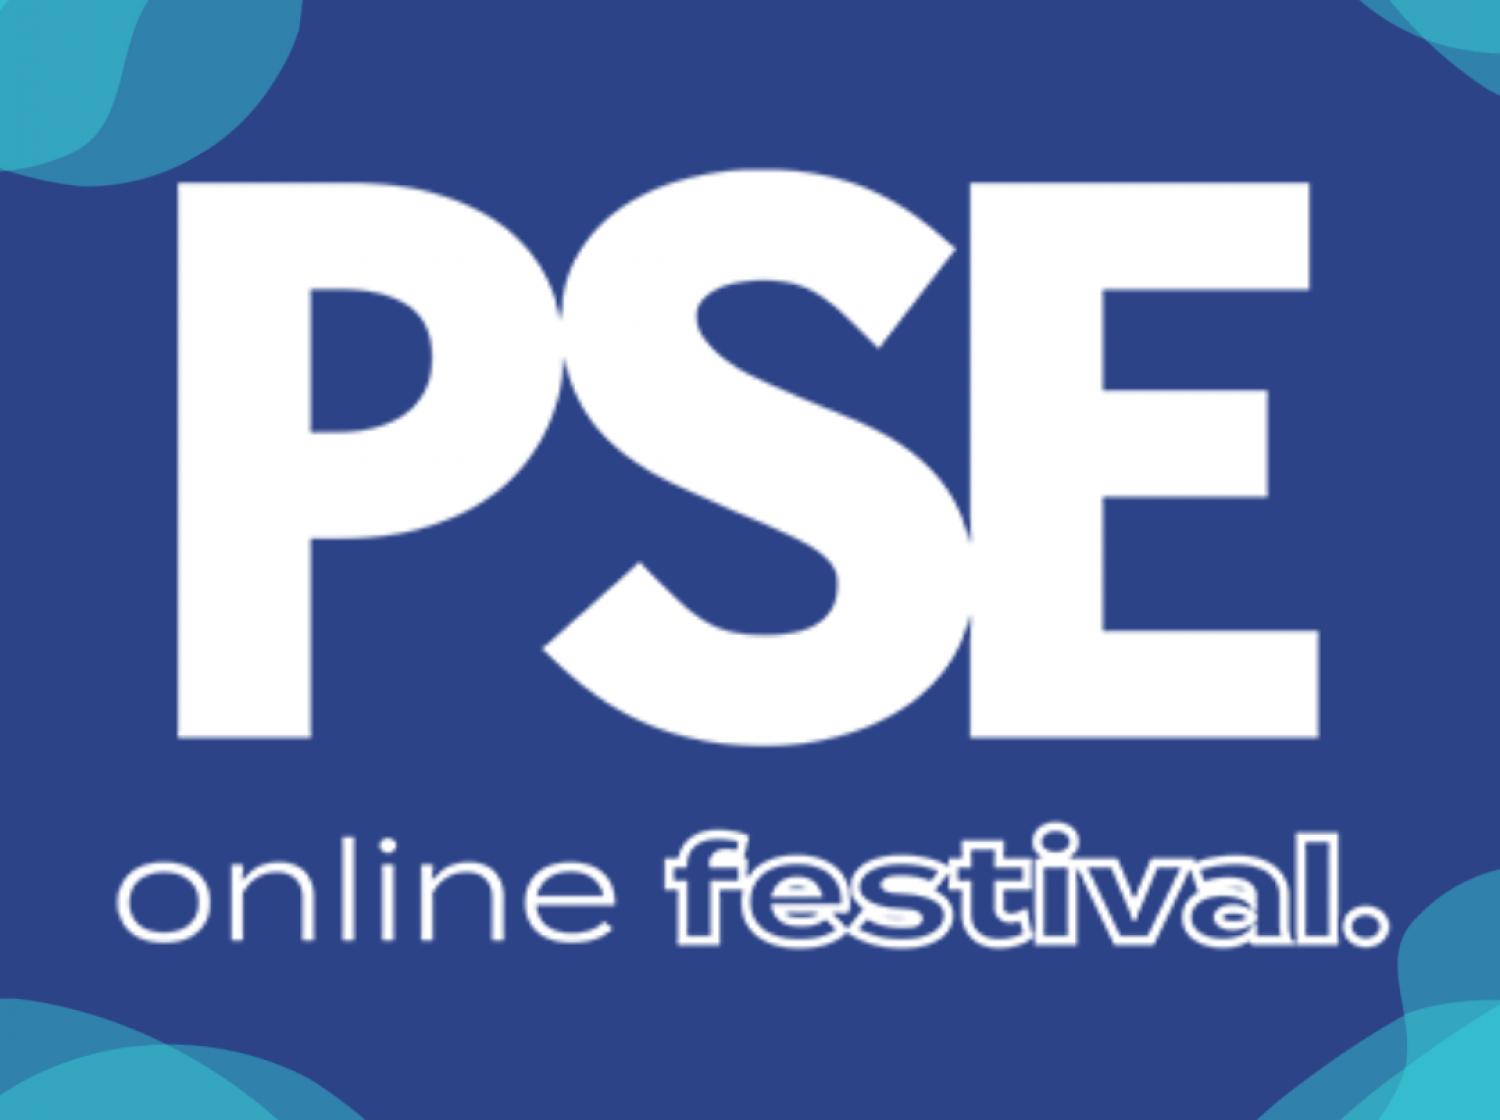 #PSE365: Public Sector Digital Transformation